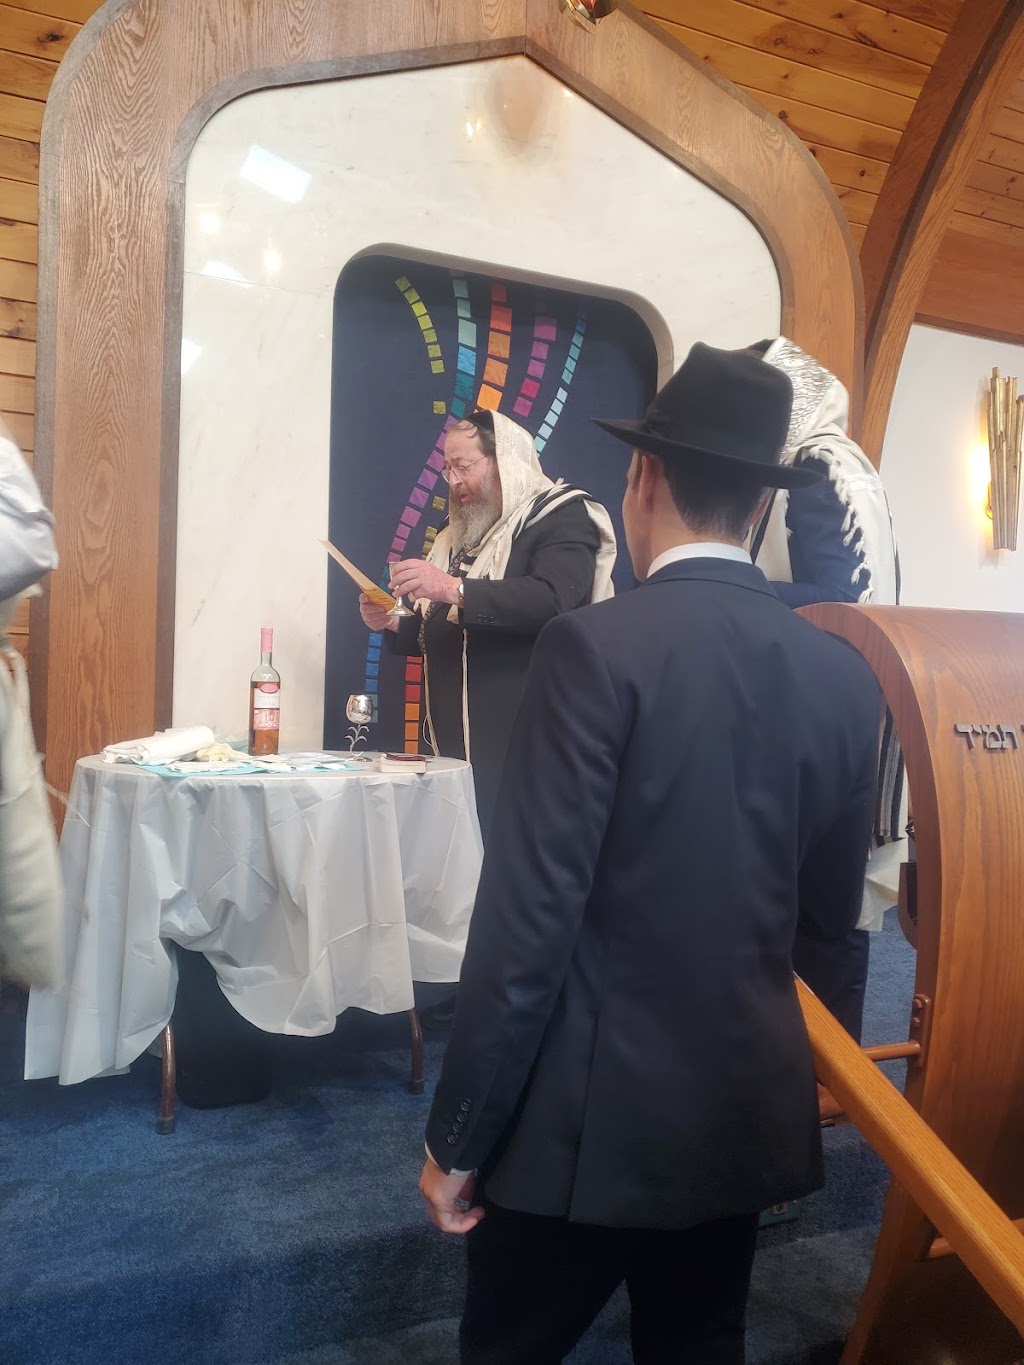 Congregation Shomrei Torah | 19-10 Morlot Ave, Fair Lawn, NJ 07410 | Phone: (201) 791-7910